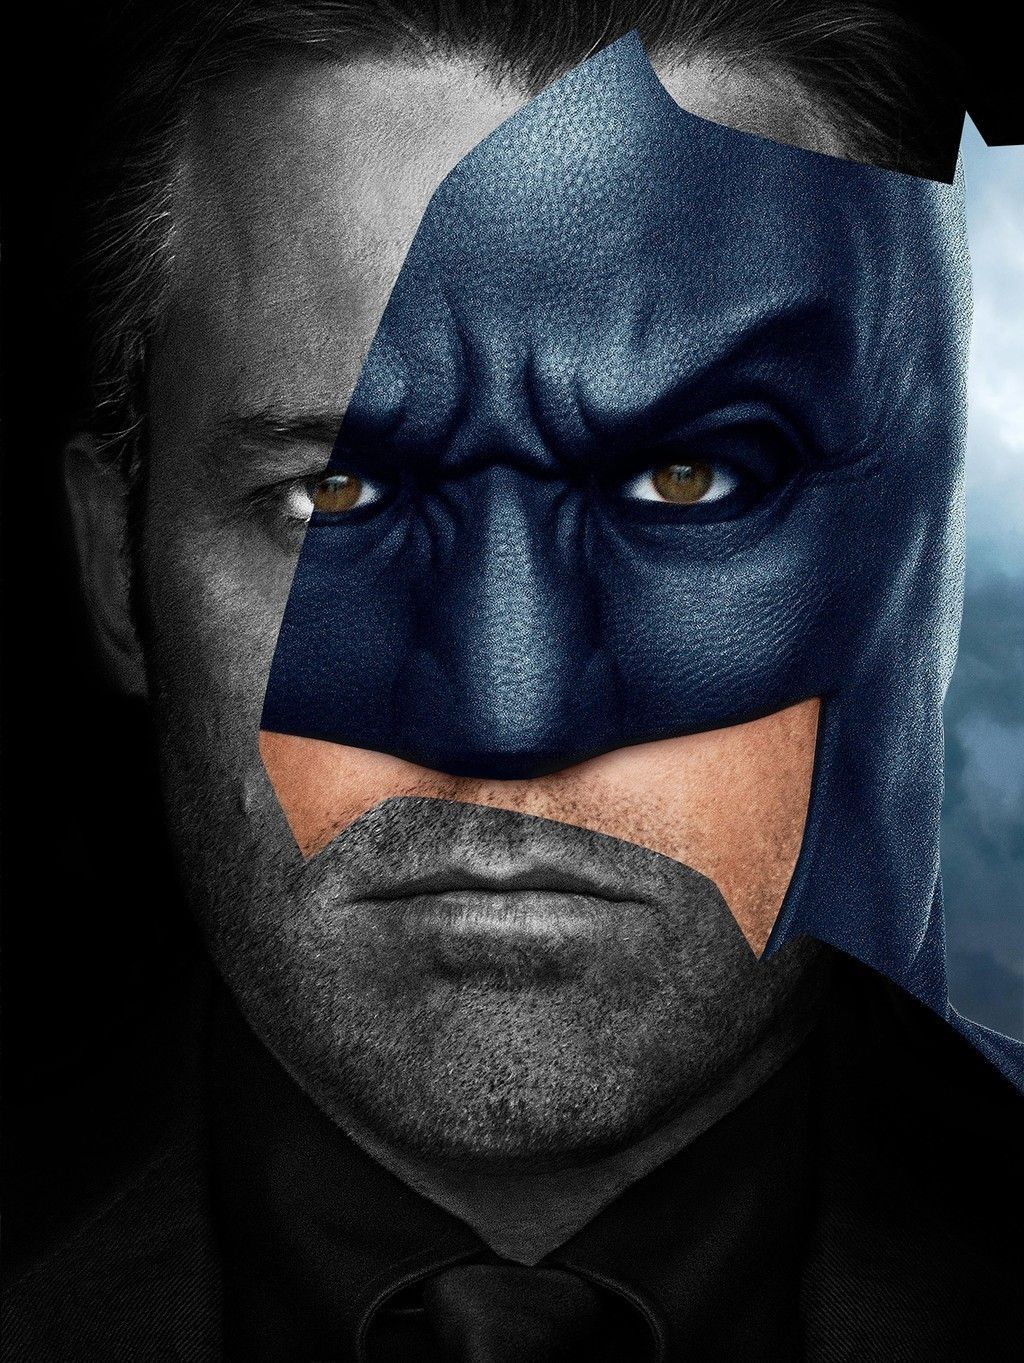 Free download Batman ben affleck justice league actor movie 4k